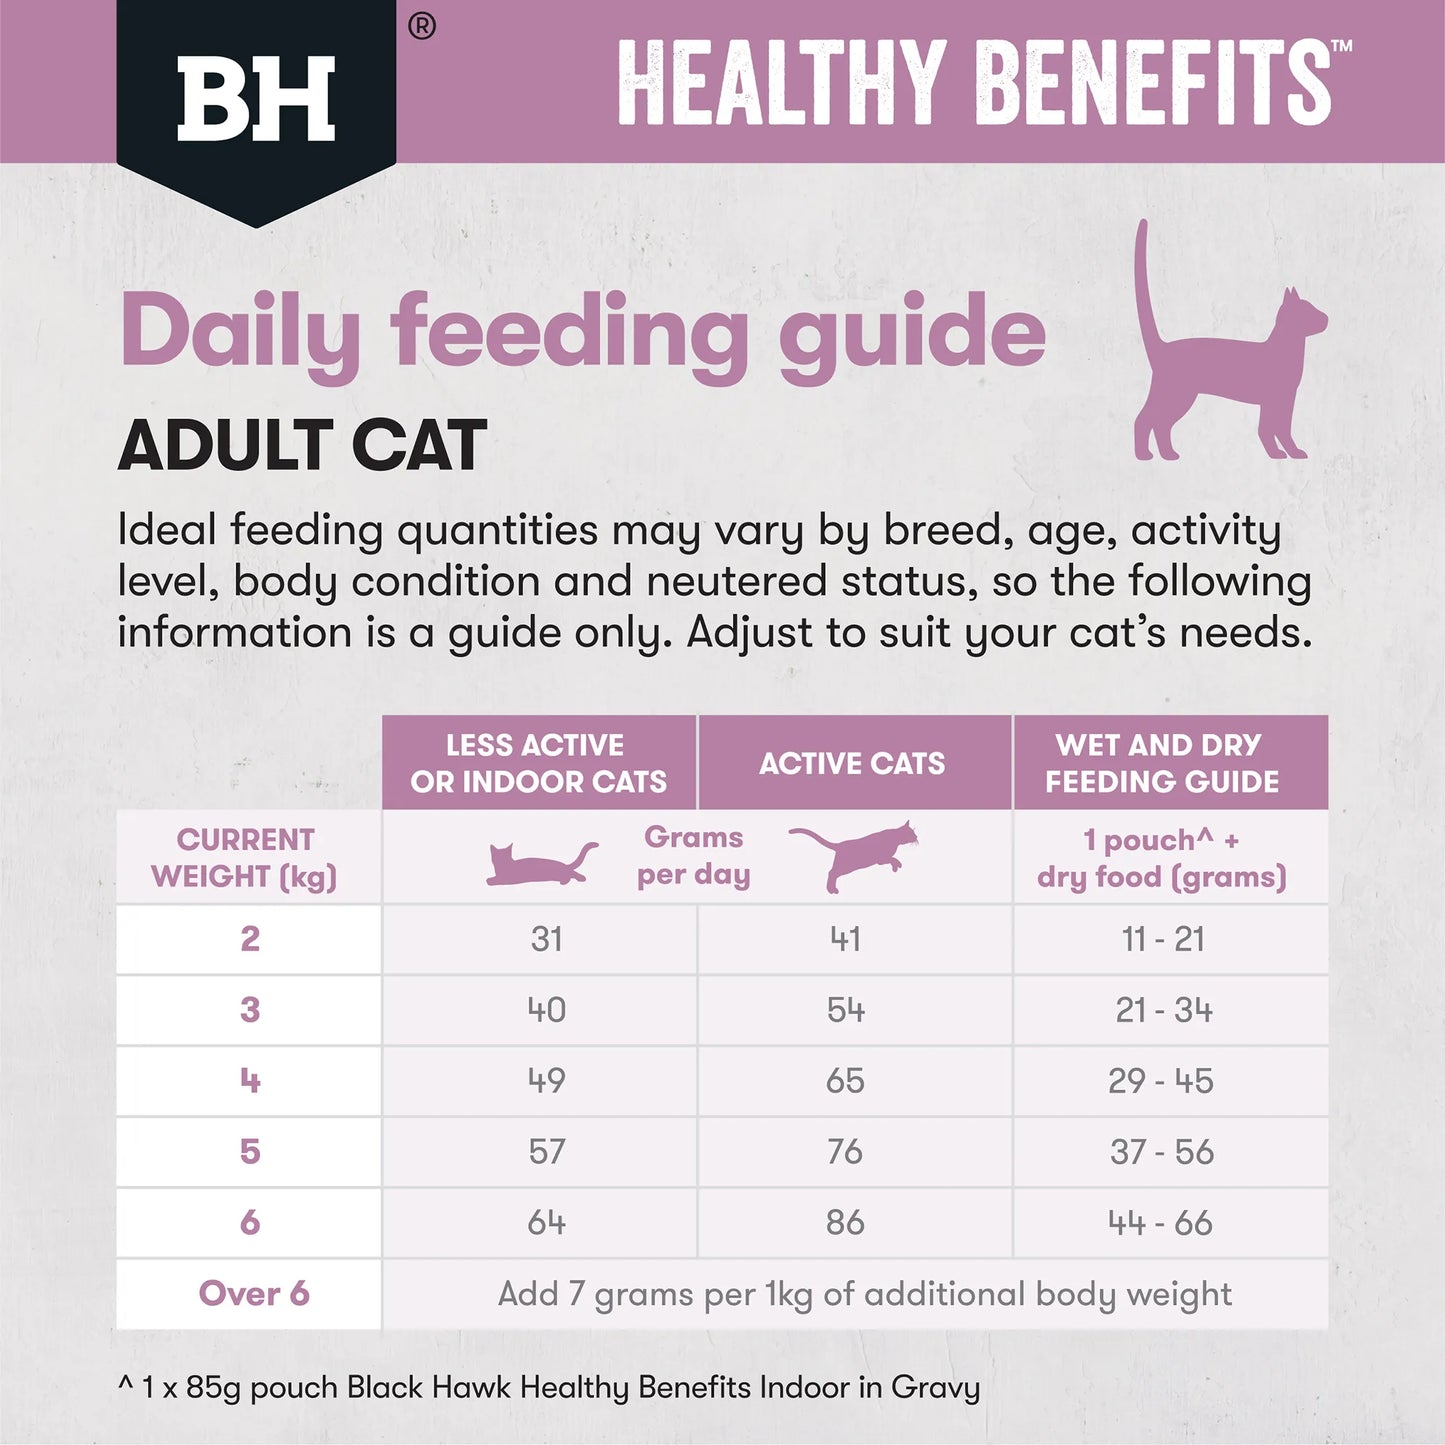 BlackHawk (NEW): Cat Healthy Benefits Hairball Chicken